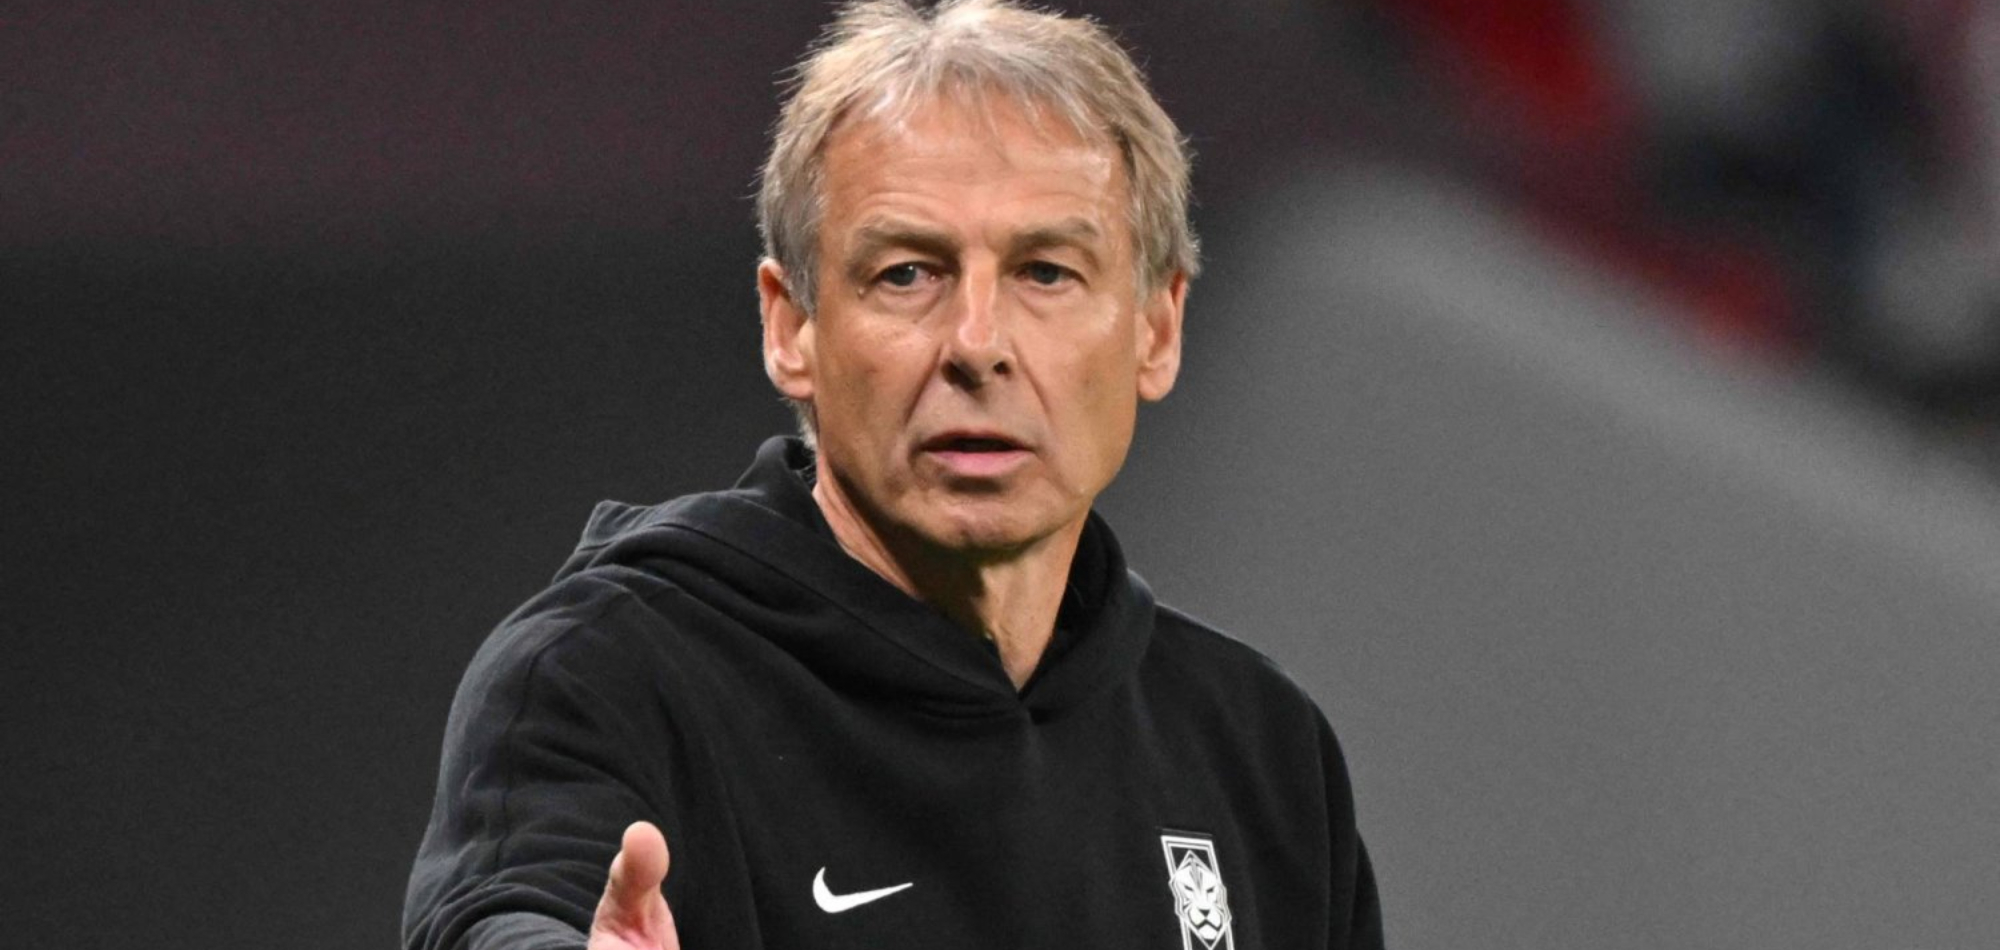 Klinsmann sacked as South Korea coach after less than a year